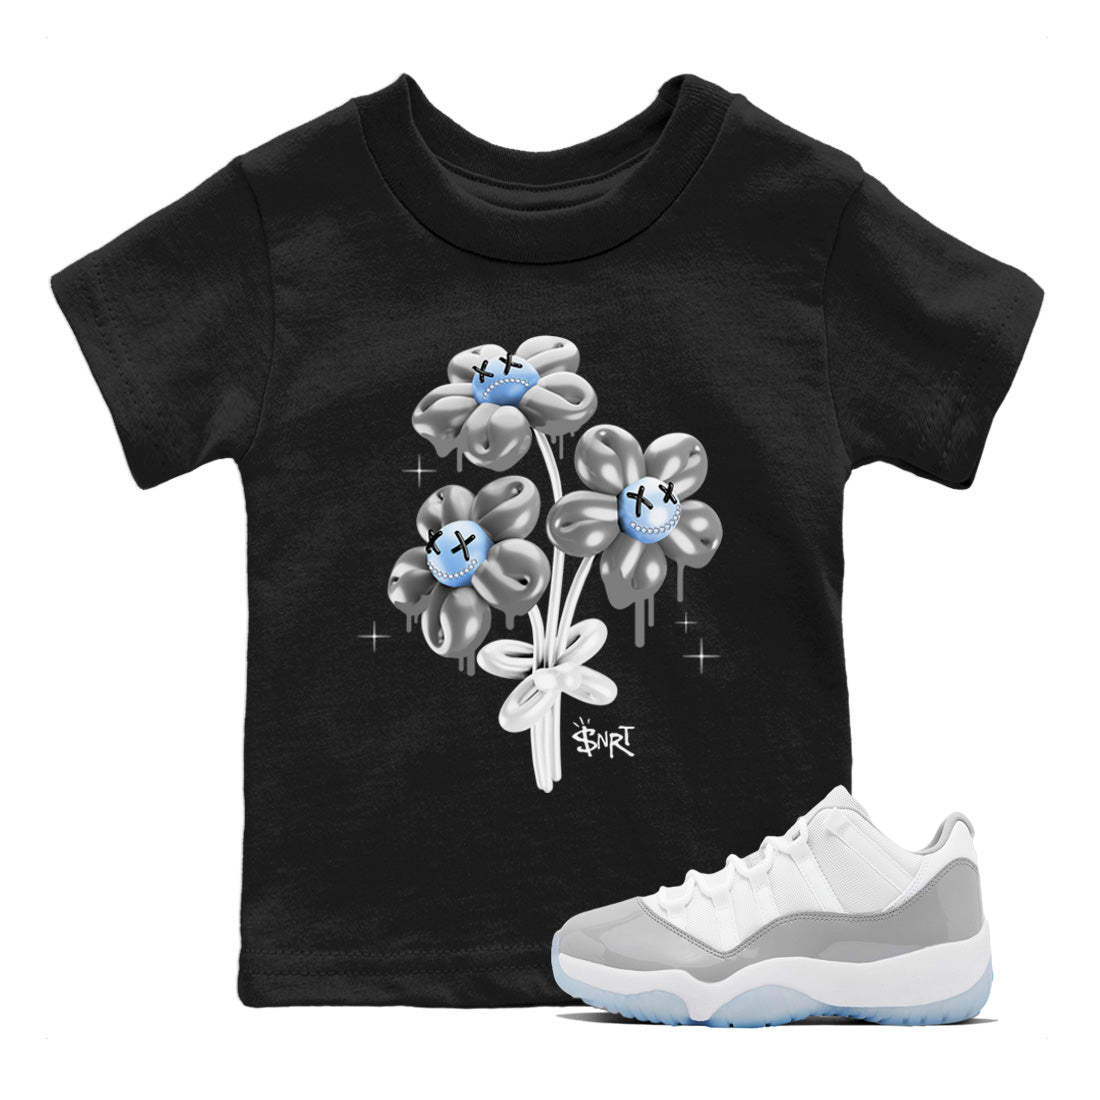 Air Jordan 11 White Cement Sneaker Tees Drip Gear Zone balloon bouquet Sneaker Tees Air Jordan 11 Cement Grey Shirt Kids Shirts Black 1